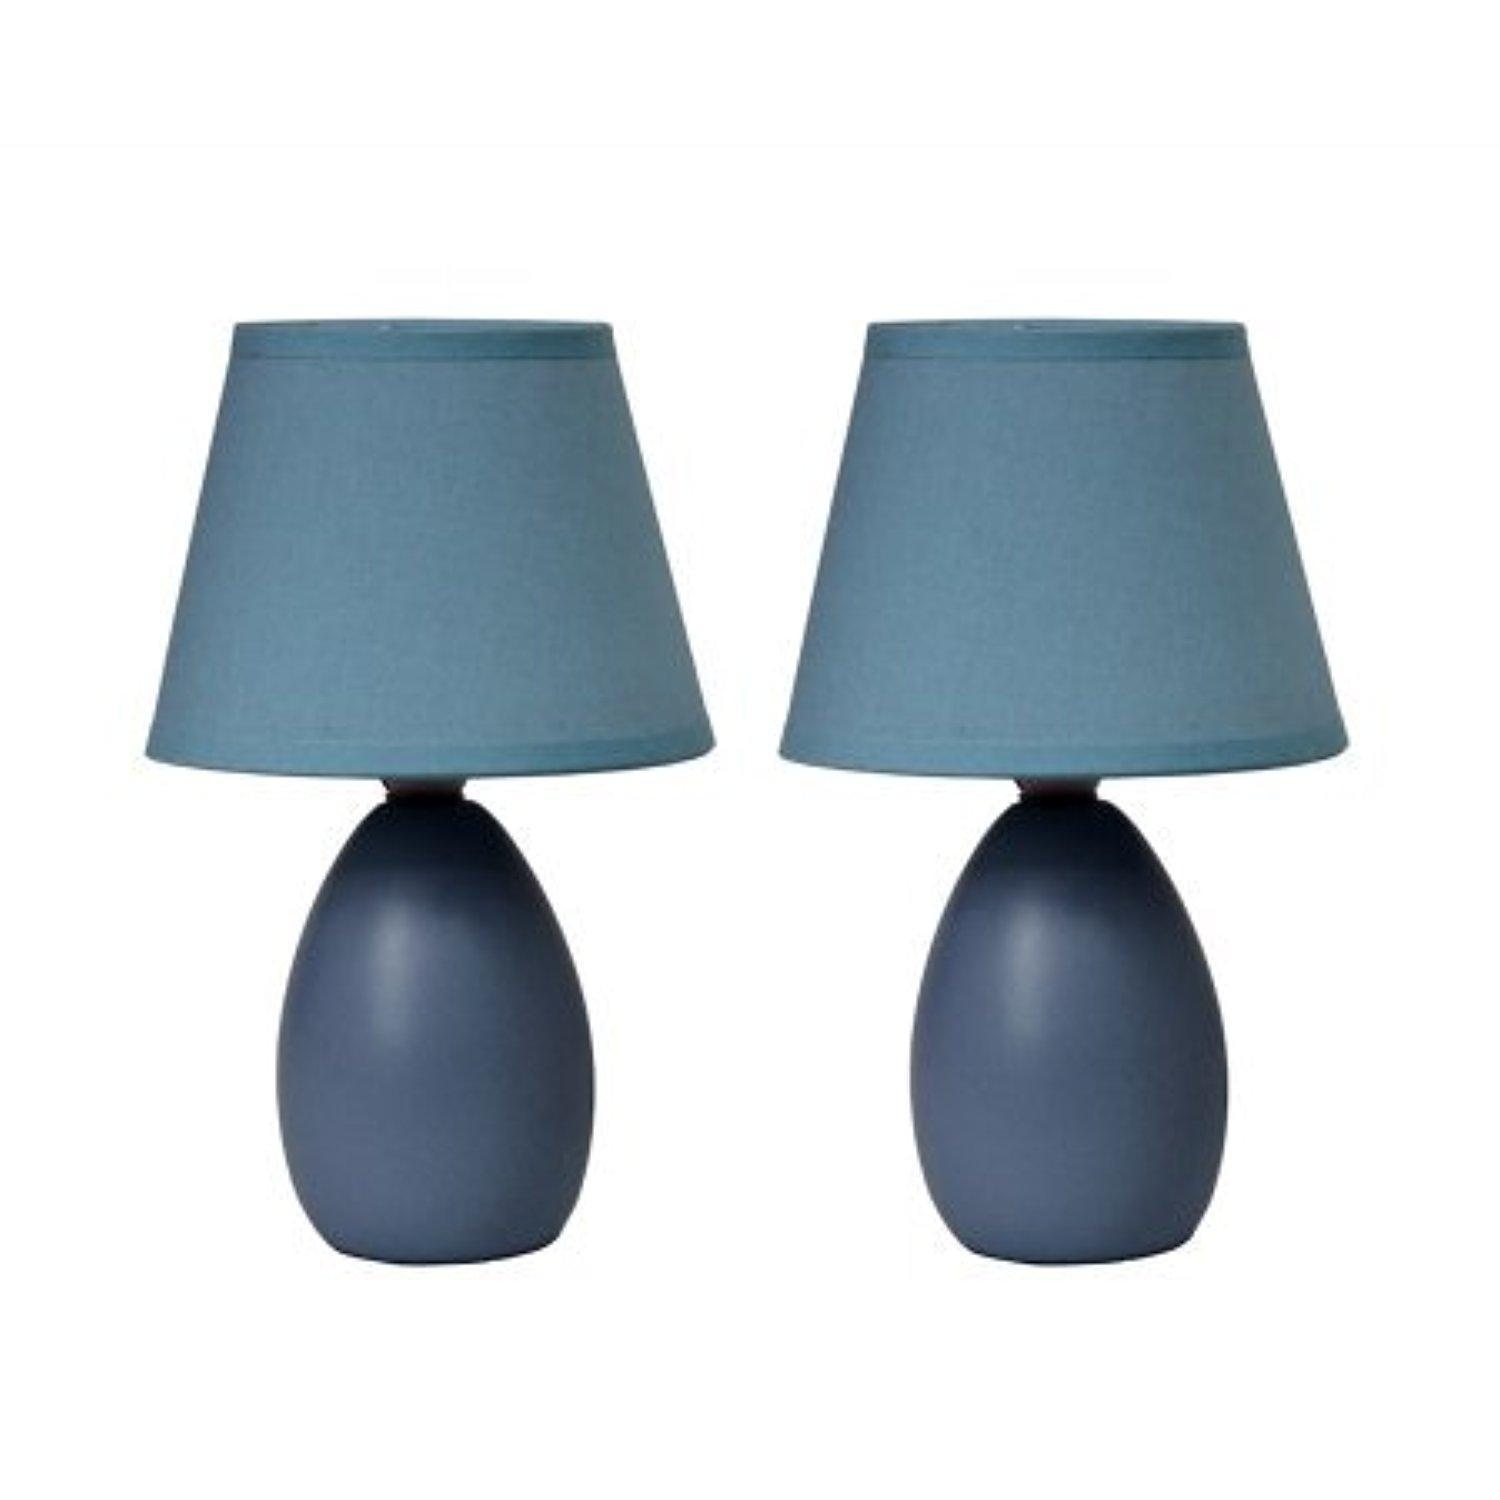 Simple Designs Mini Egg Oval Ceramic Table Lamp 2-Pack Set,Blue